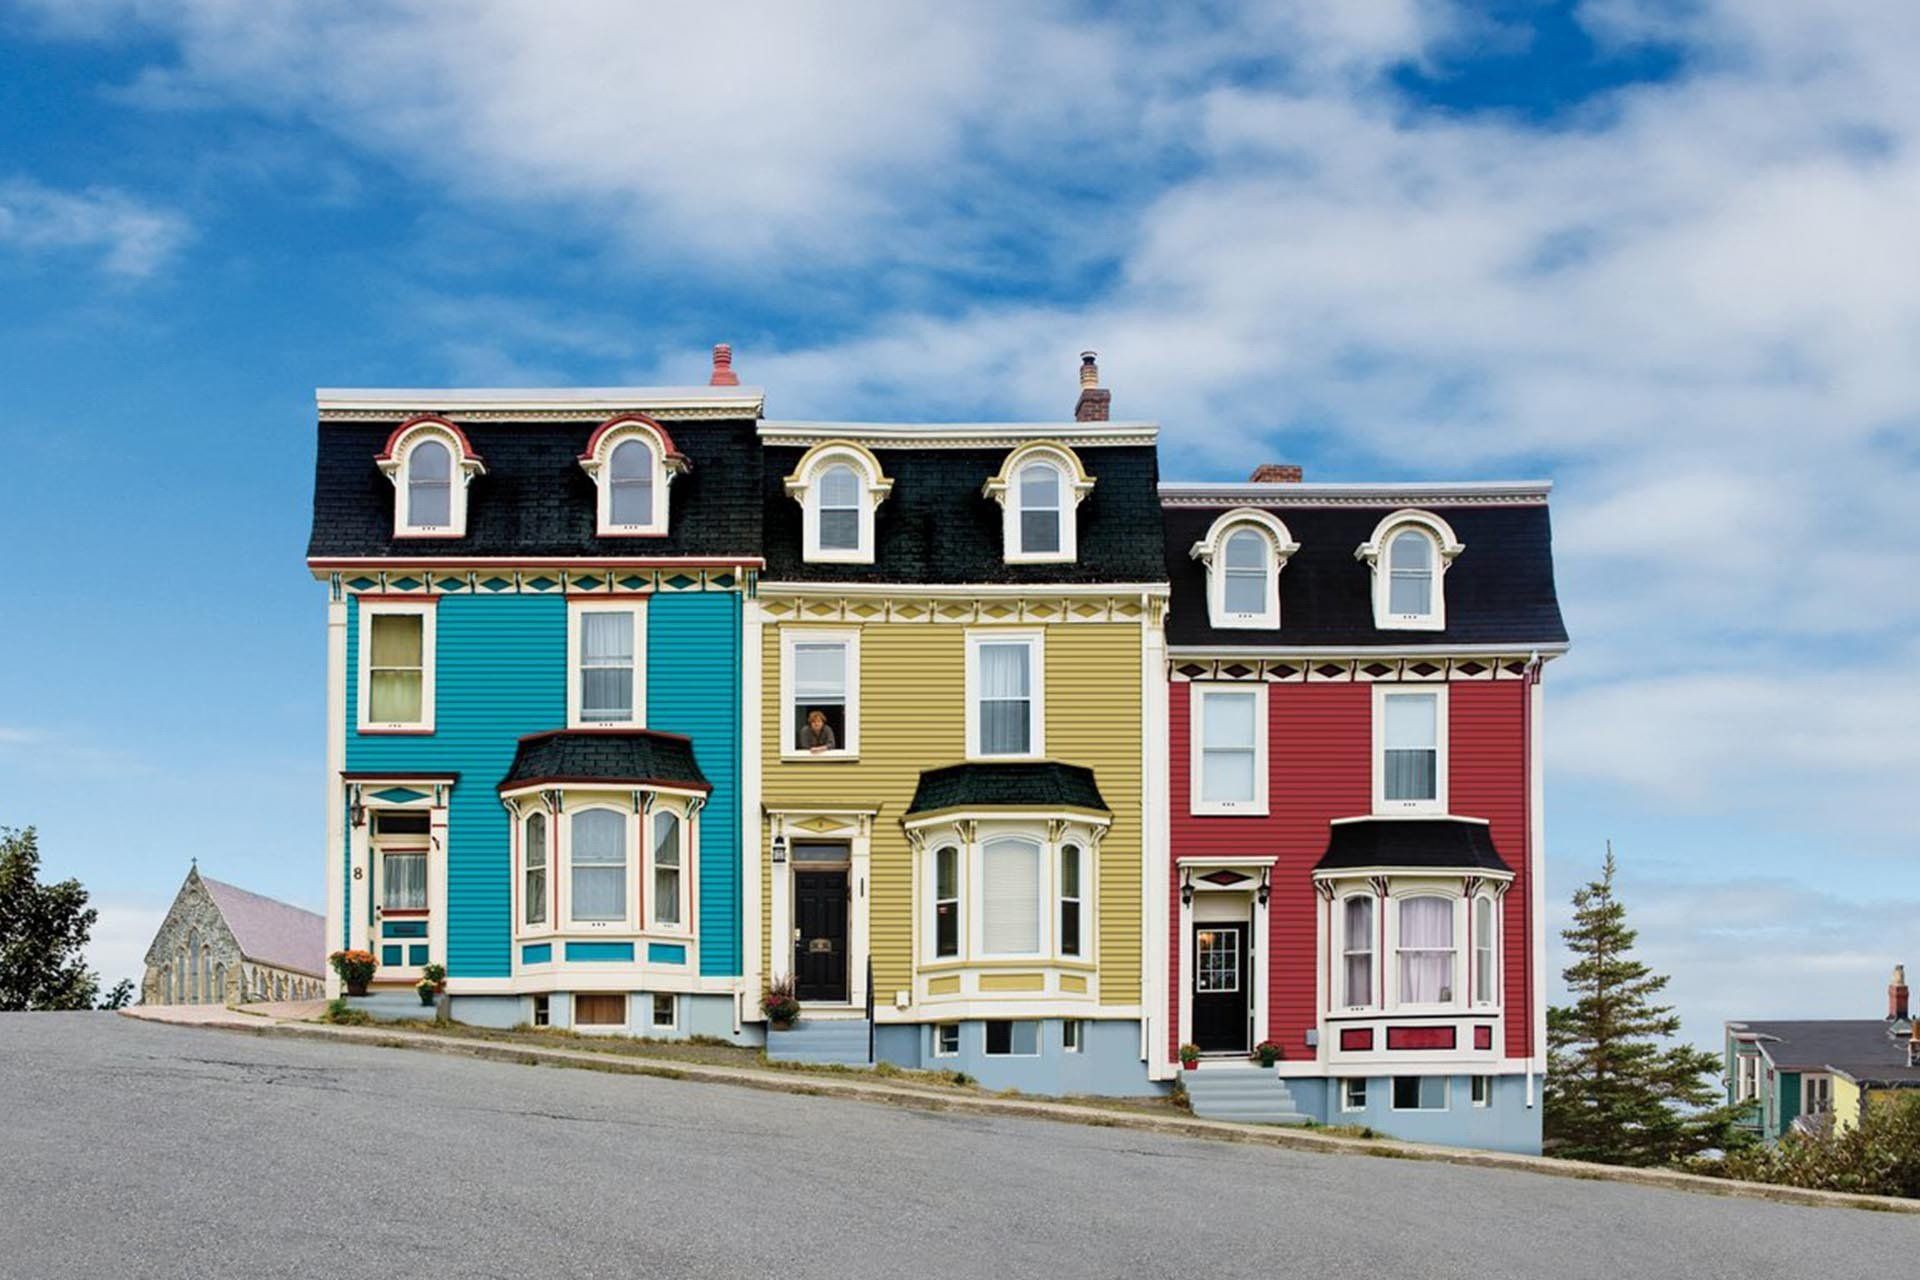 St. Johns, Newfoundland